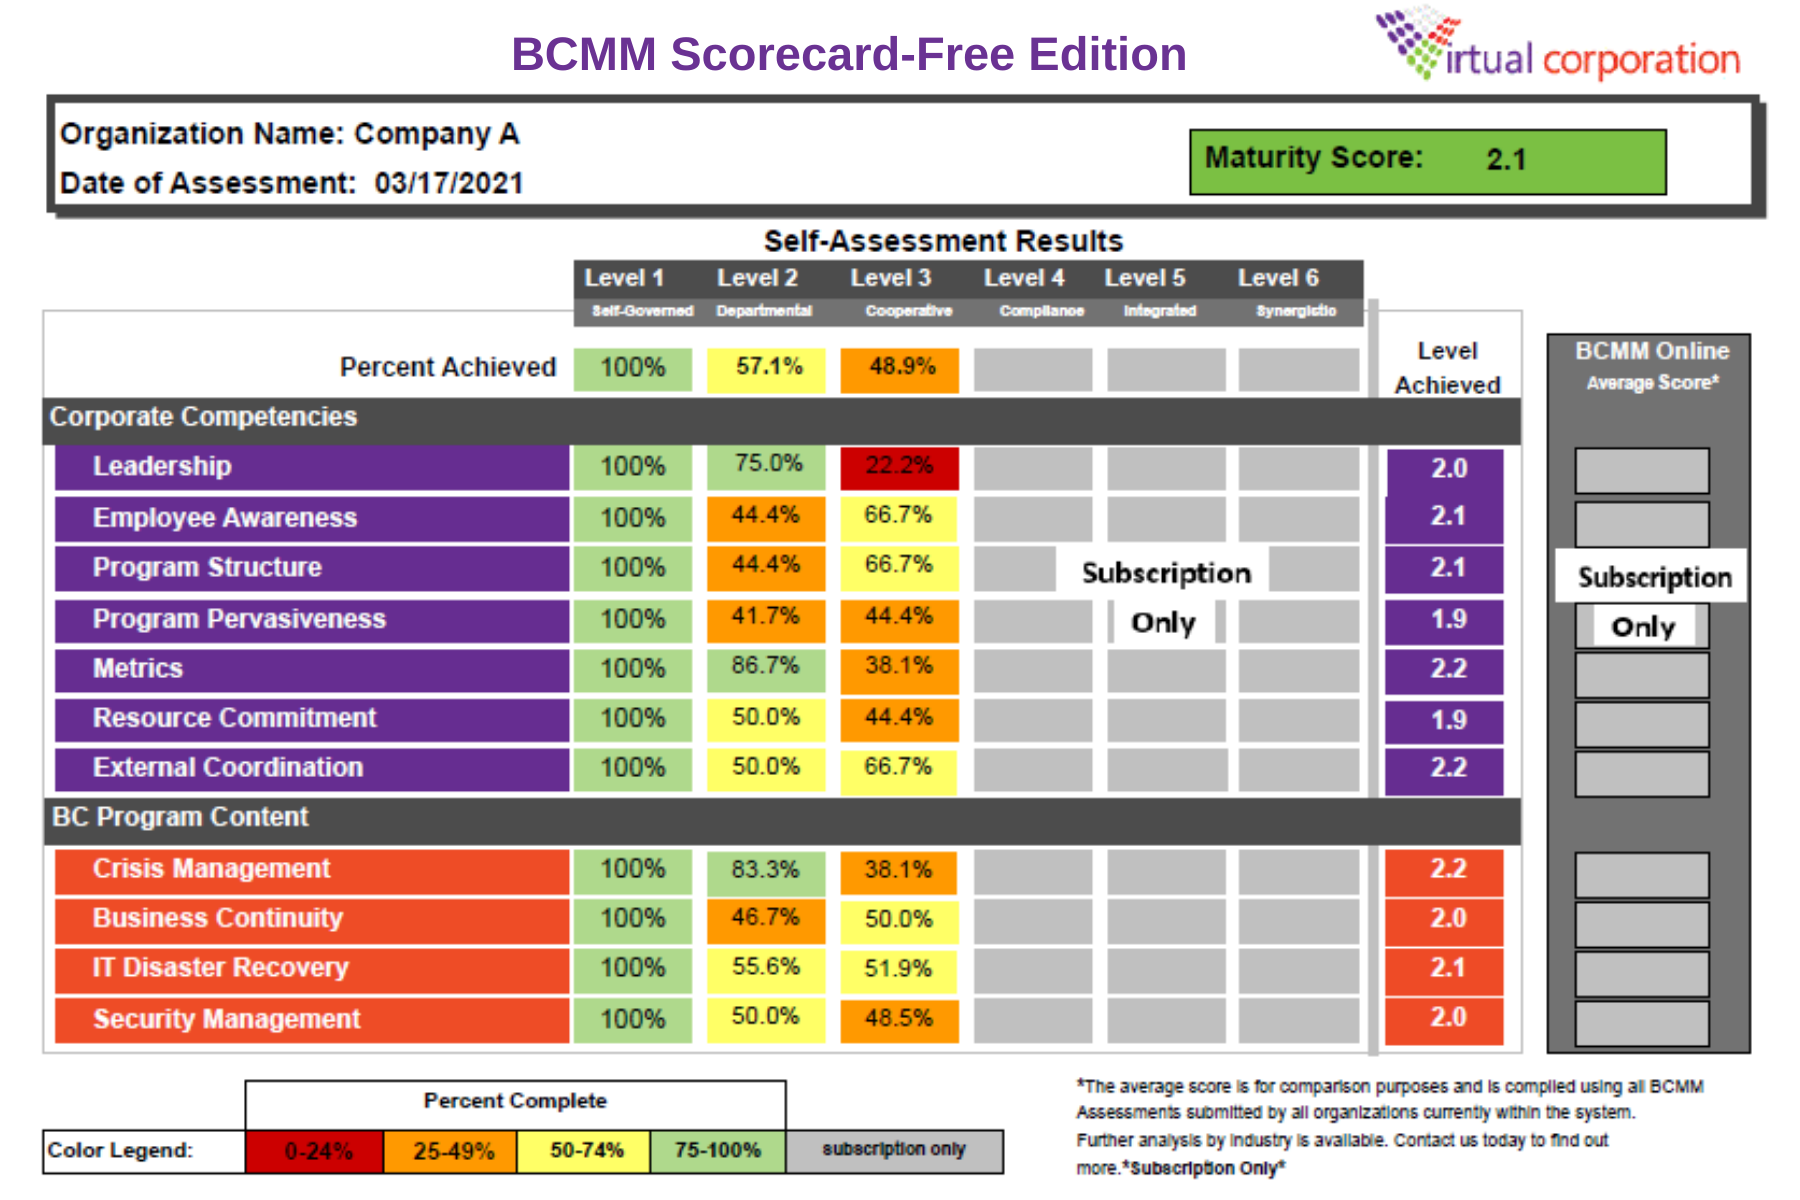 BCMM Scorecard-Free Edition 